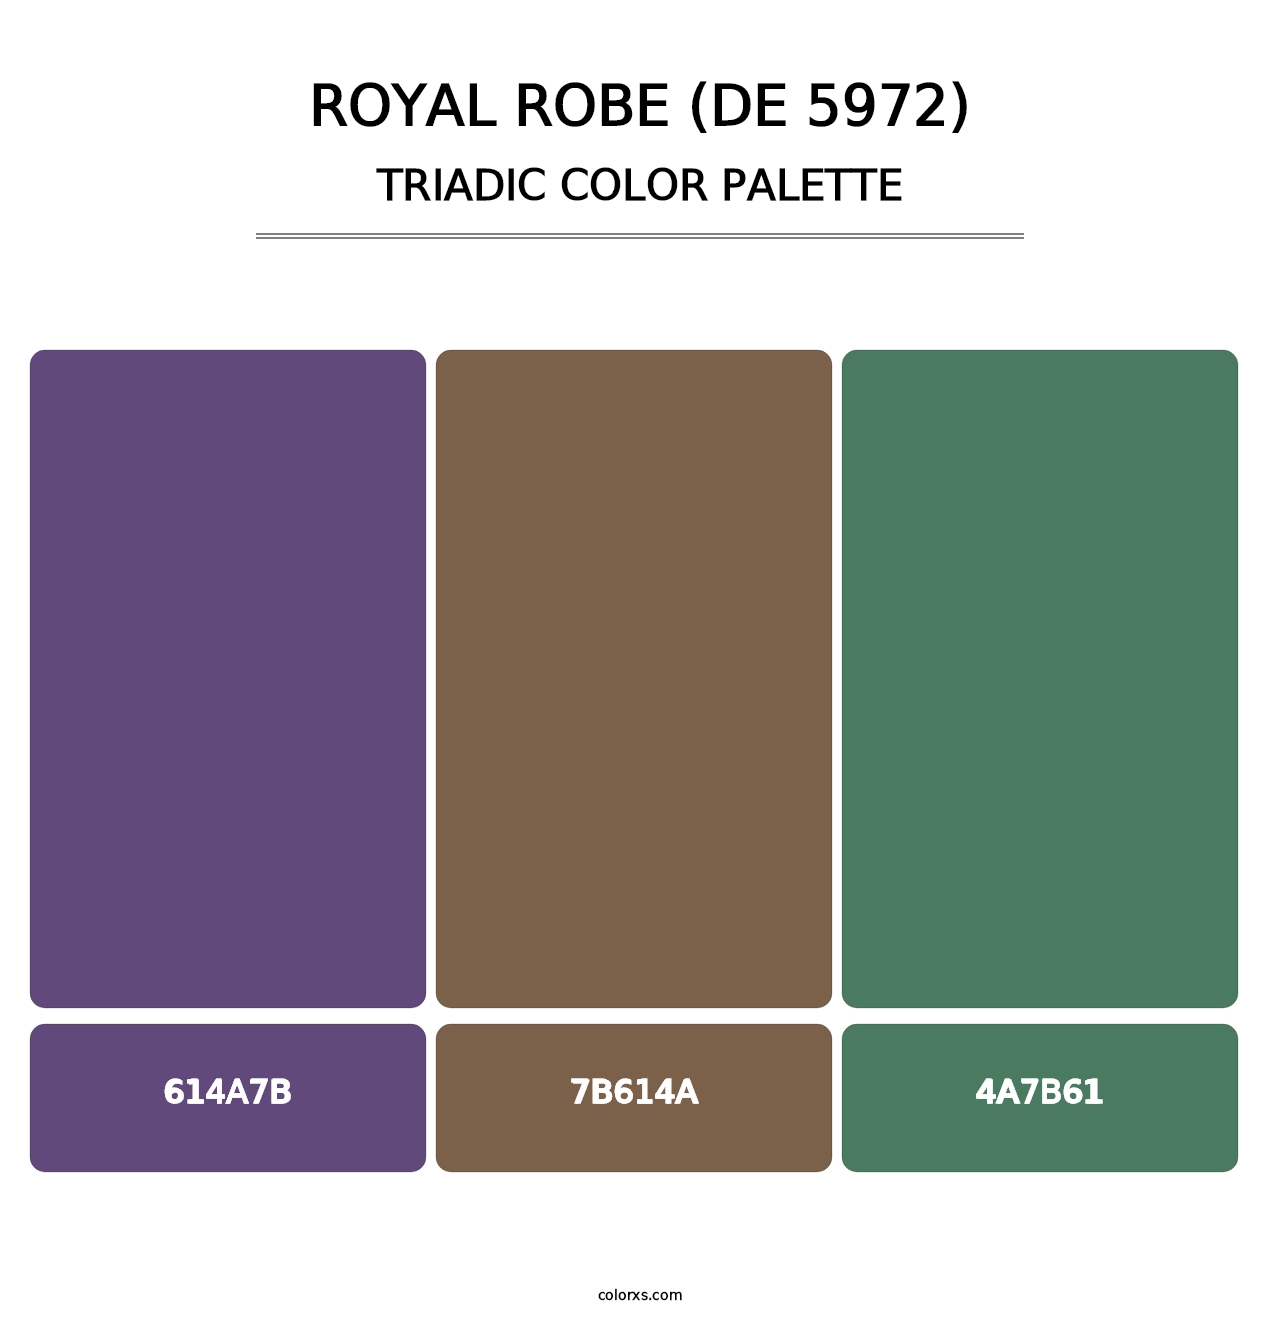 Royal Robe (DE 5972) - Triadic Color Palette